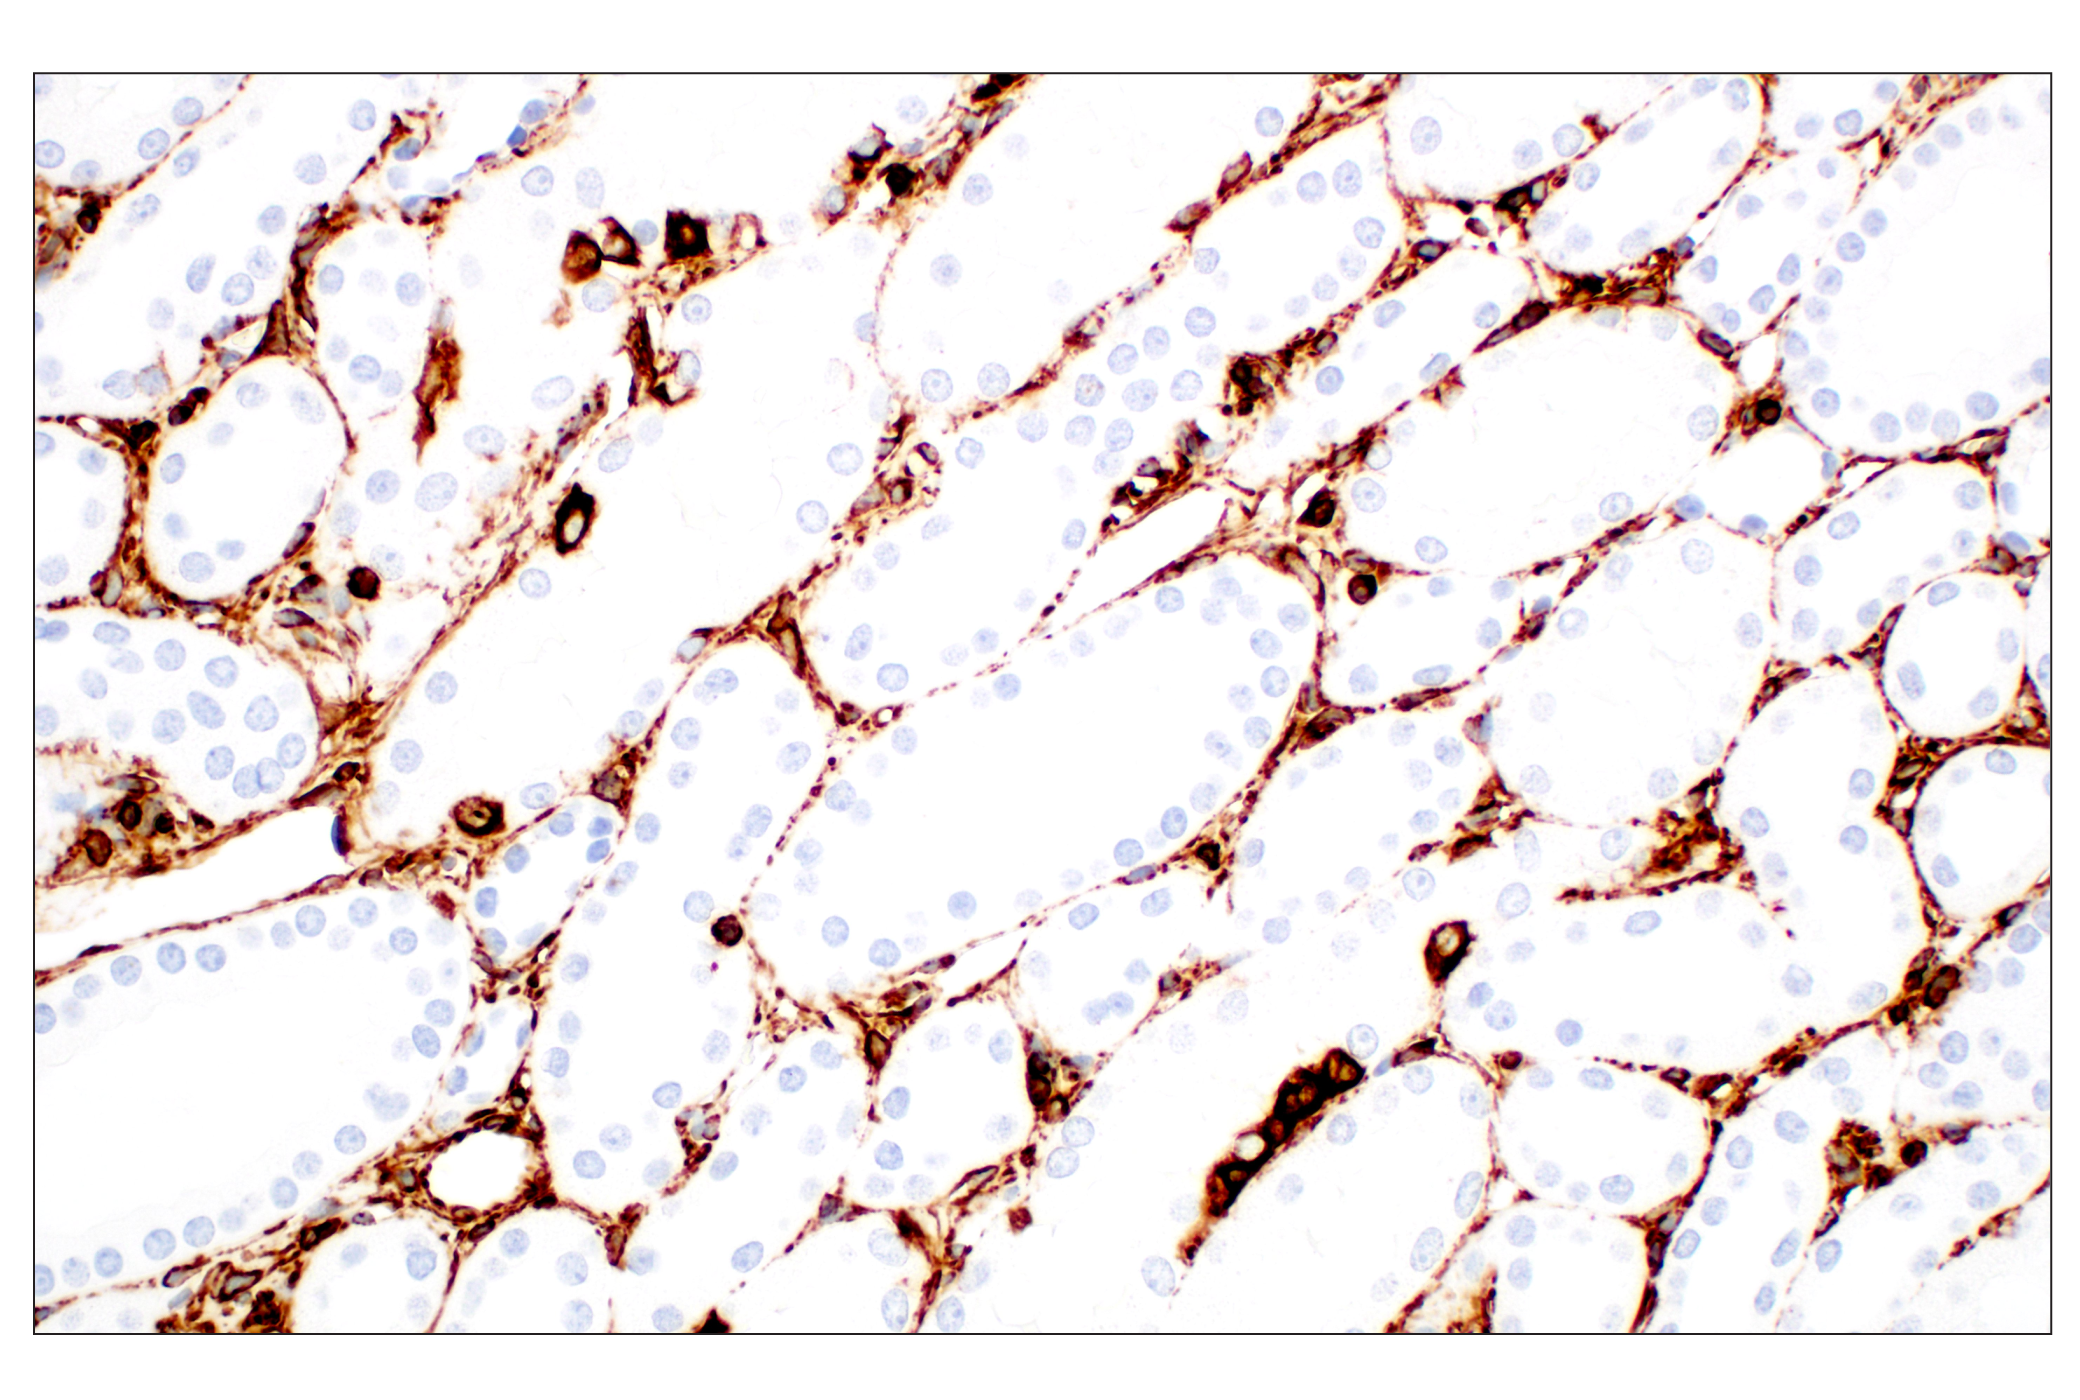  Image 46: Cancer Associated Fibroblast Marker Antibody Sampler Kit